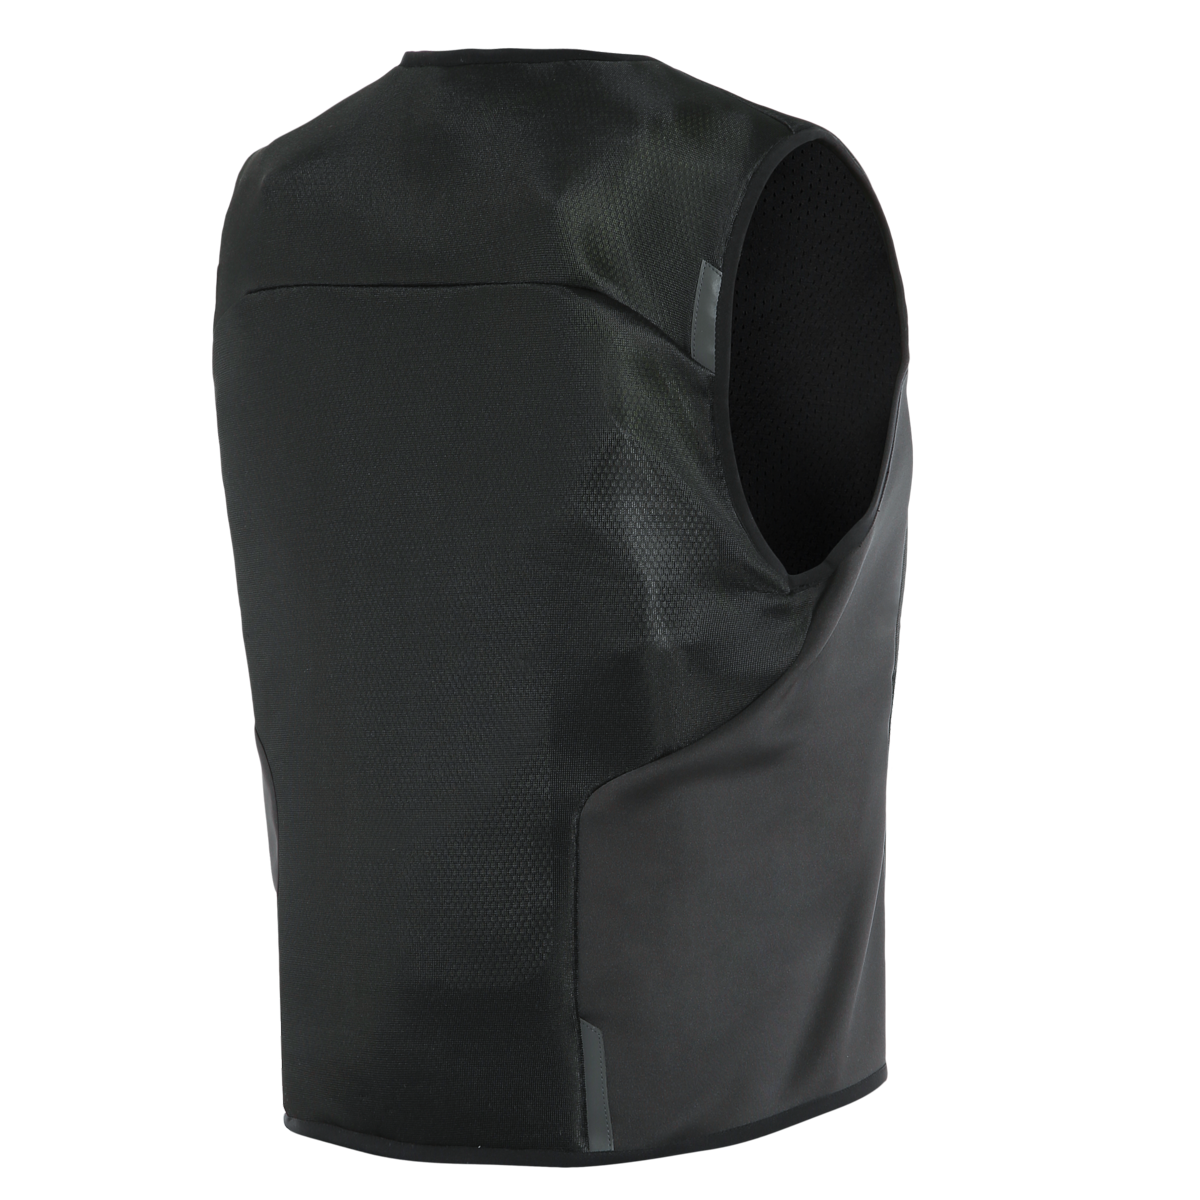 Dainese smart jacket gilet airbag b